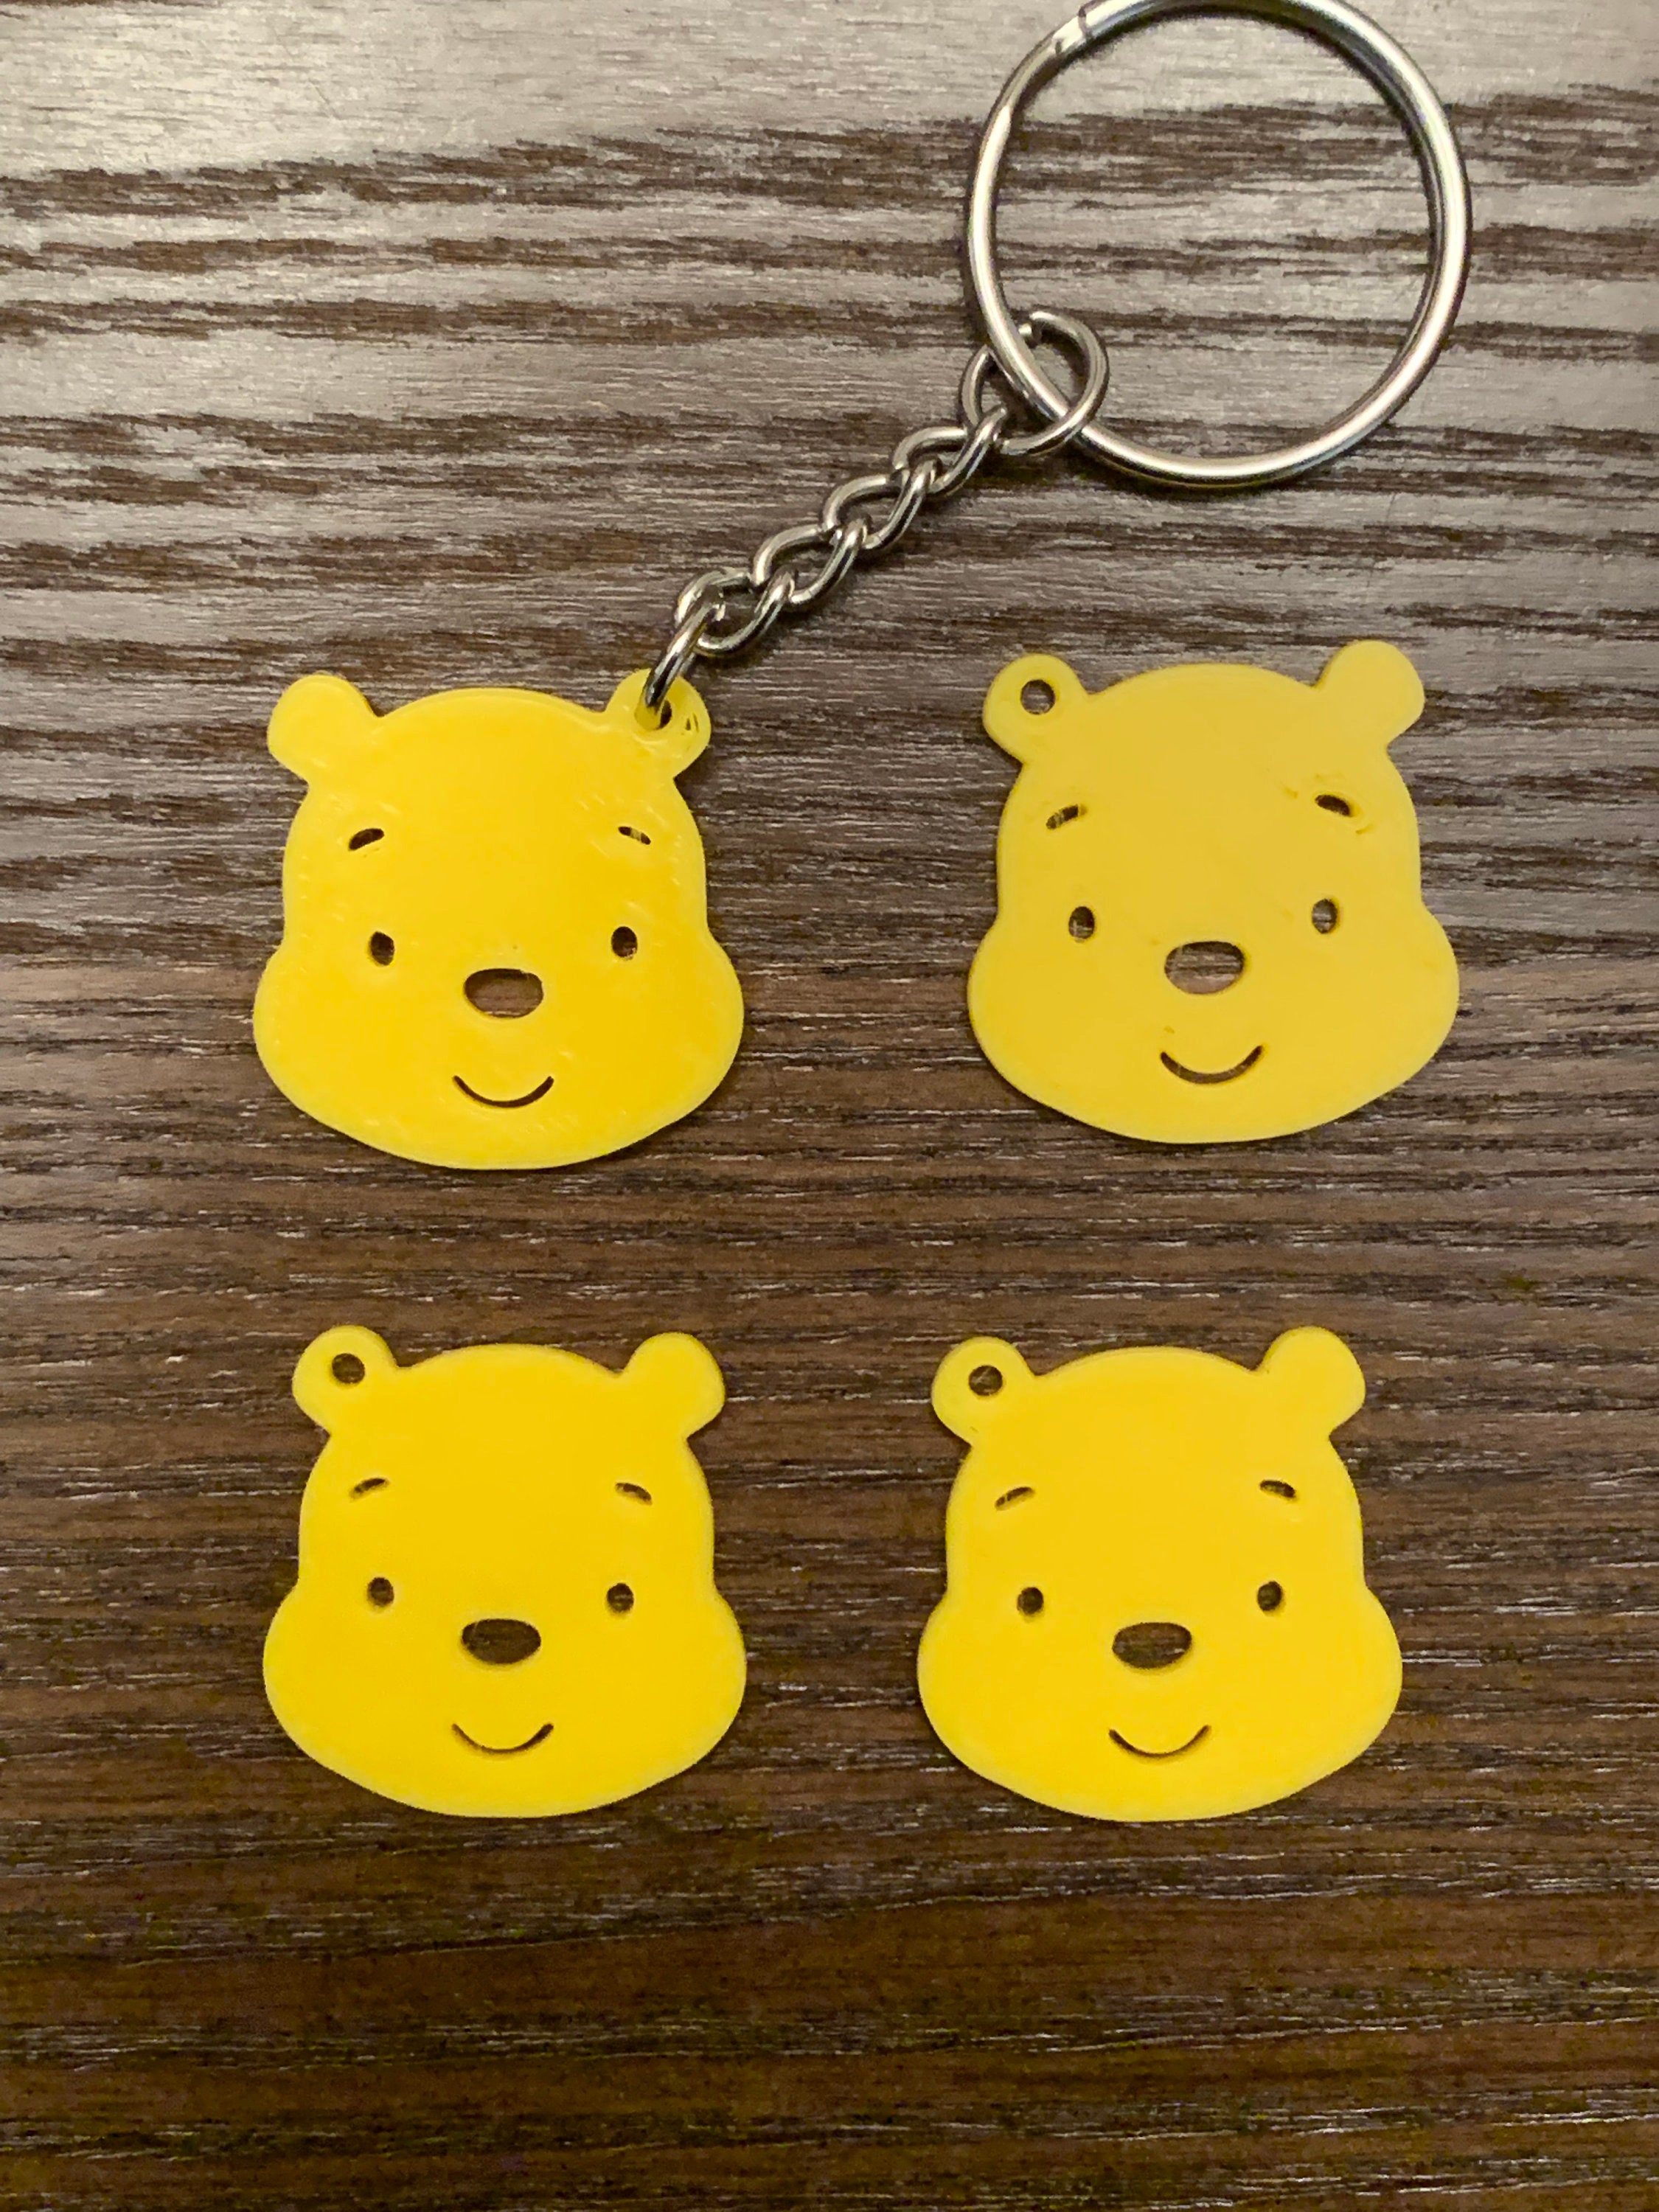 Winnie and Me Personalized Initial Keychain